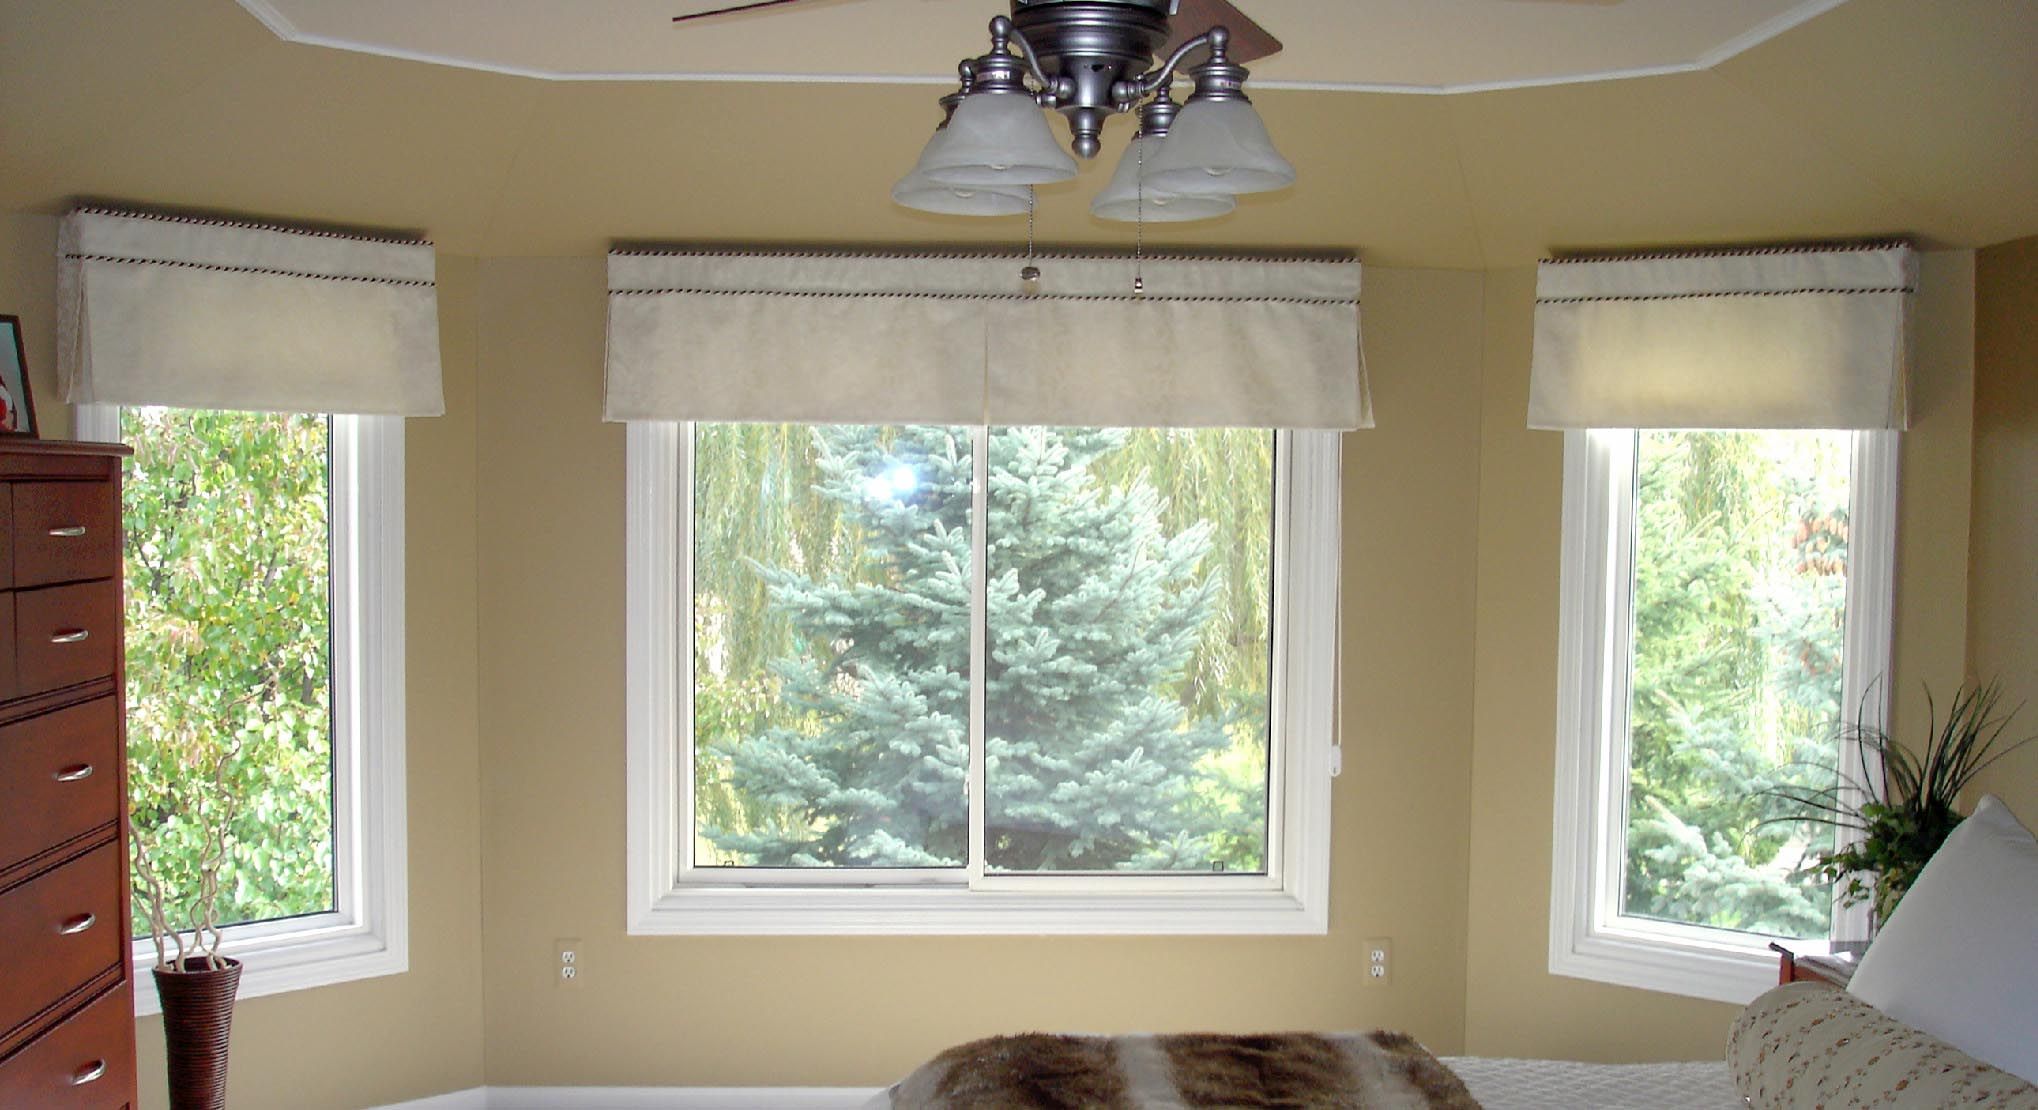 Window Valance Ideas: 8 Curtain Valances To Dress Windows